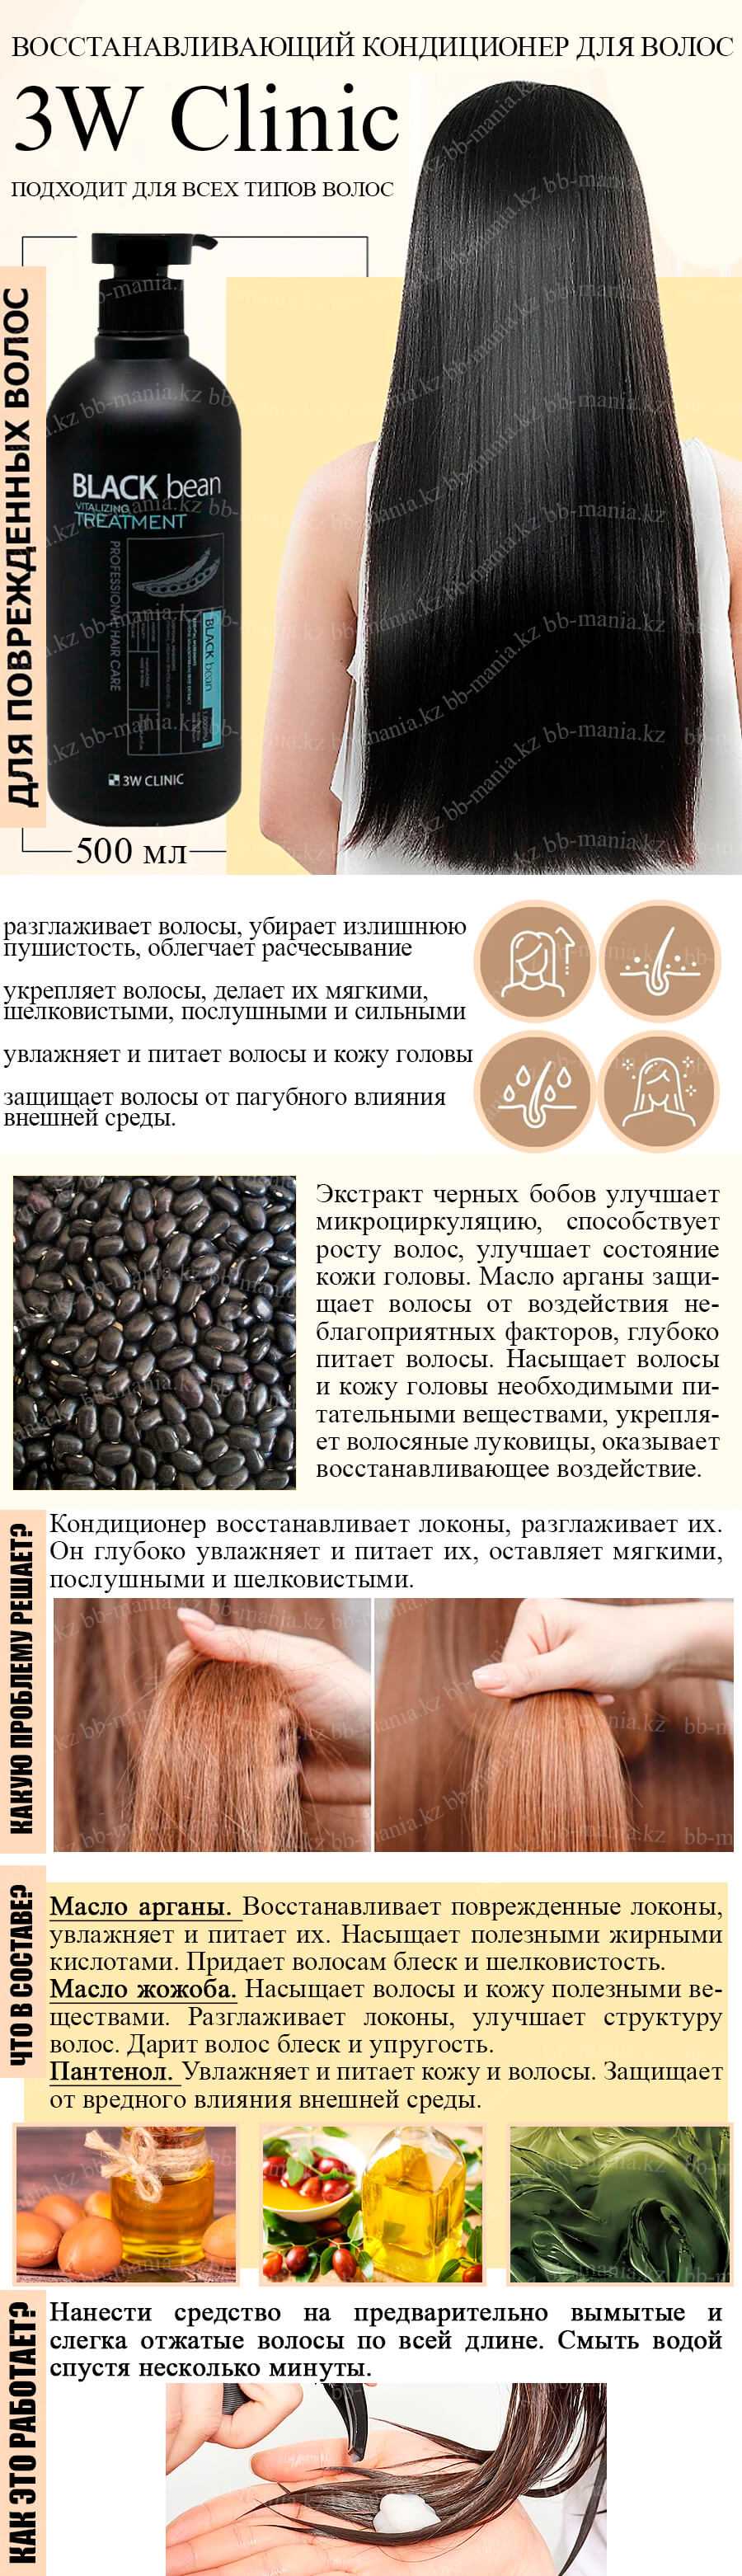 Black Bean Vitalizang Treatment [3W Clinic]